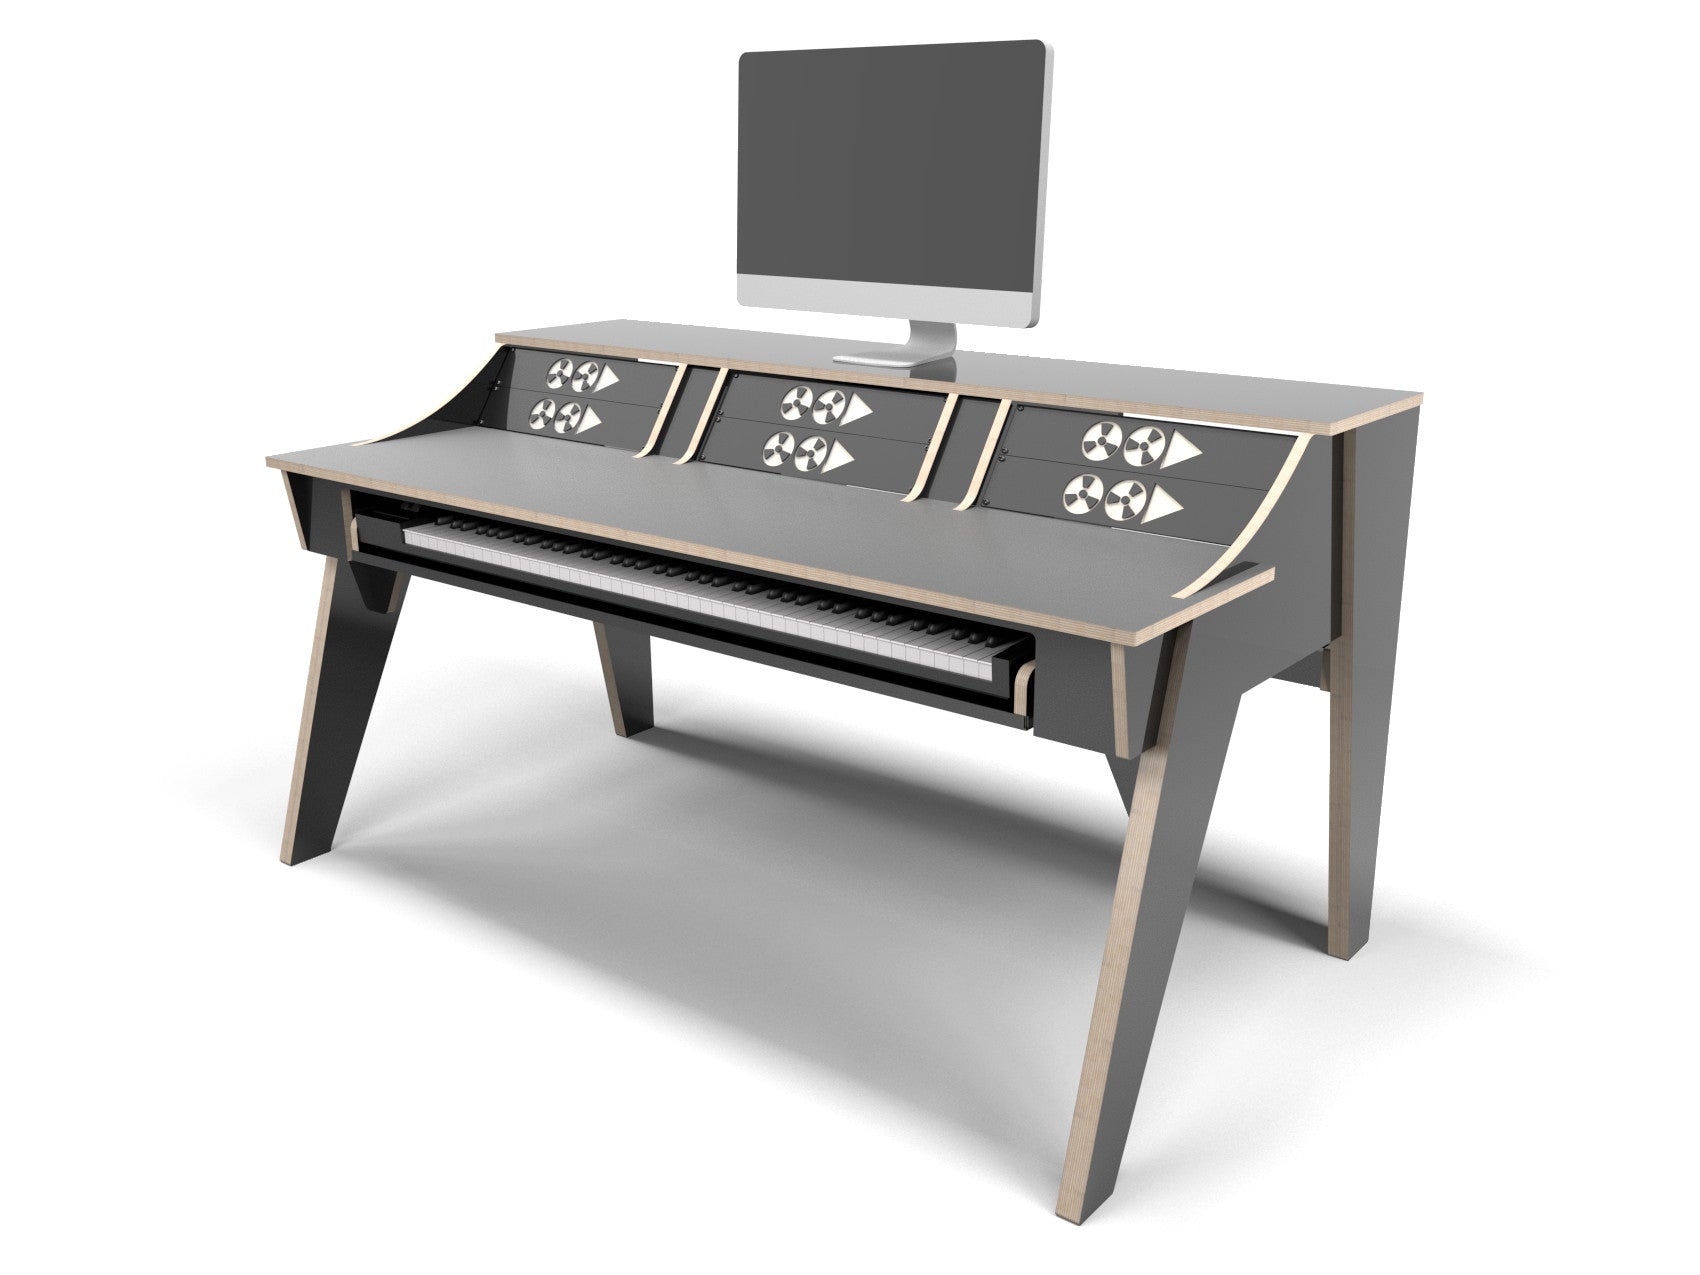 Flow Black Studio Desk with Keyboard Tray